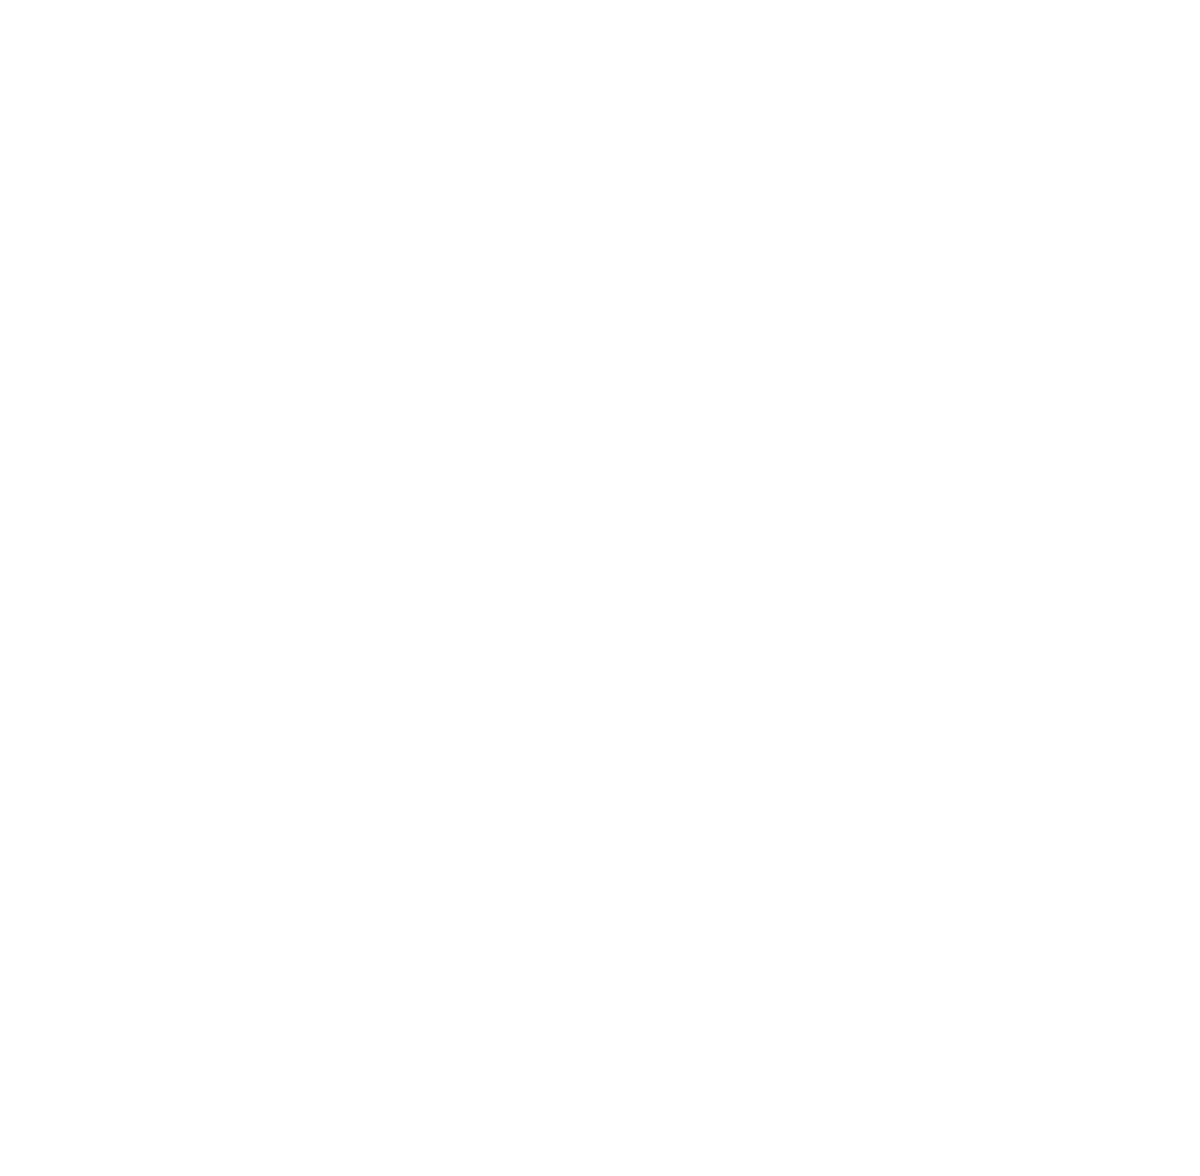 Gordon-Highlander-win-DBJs-Middle-Market-award